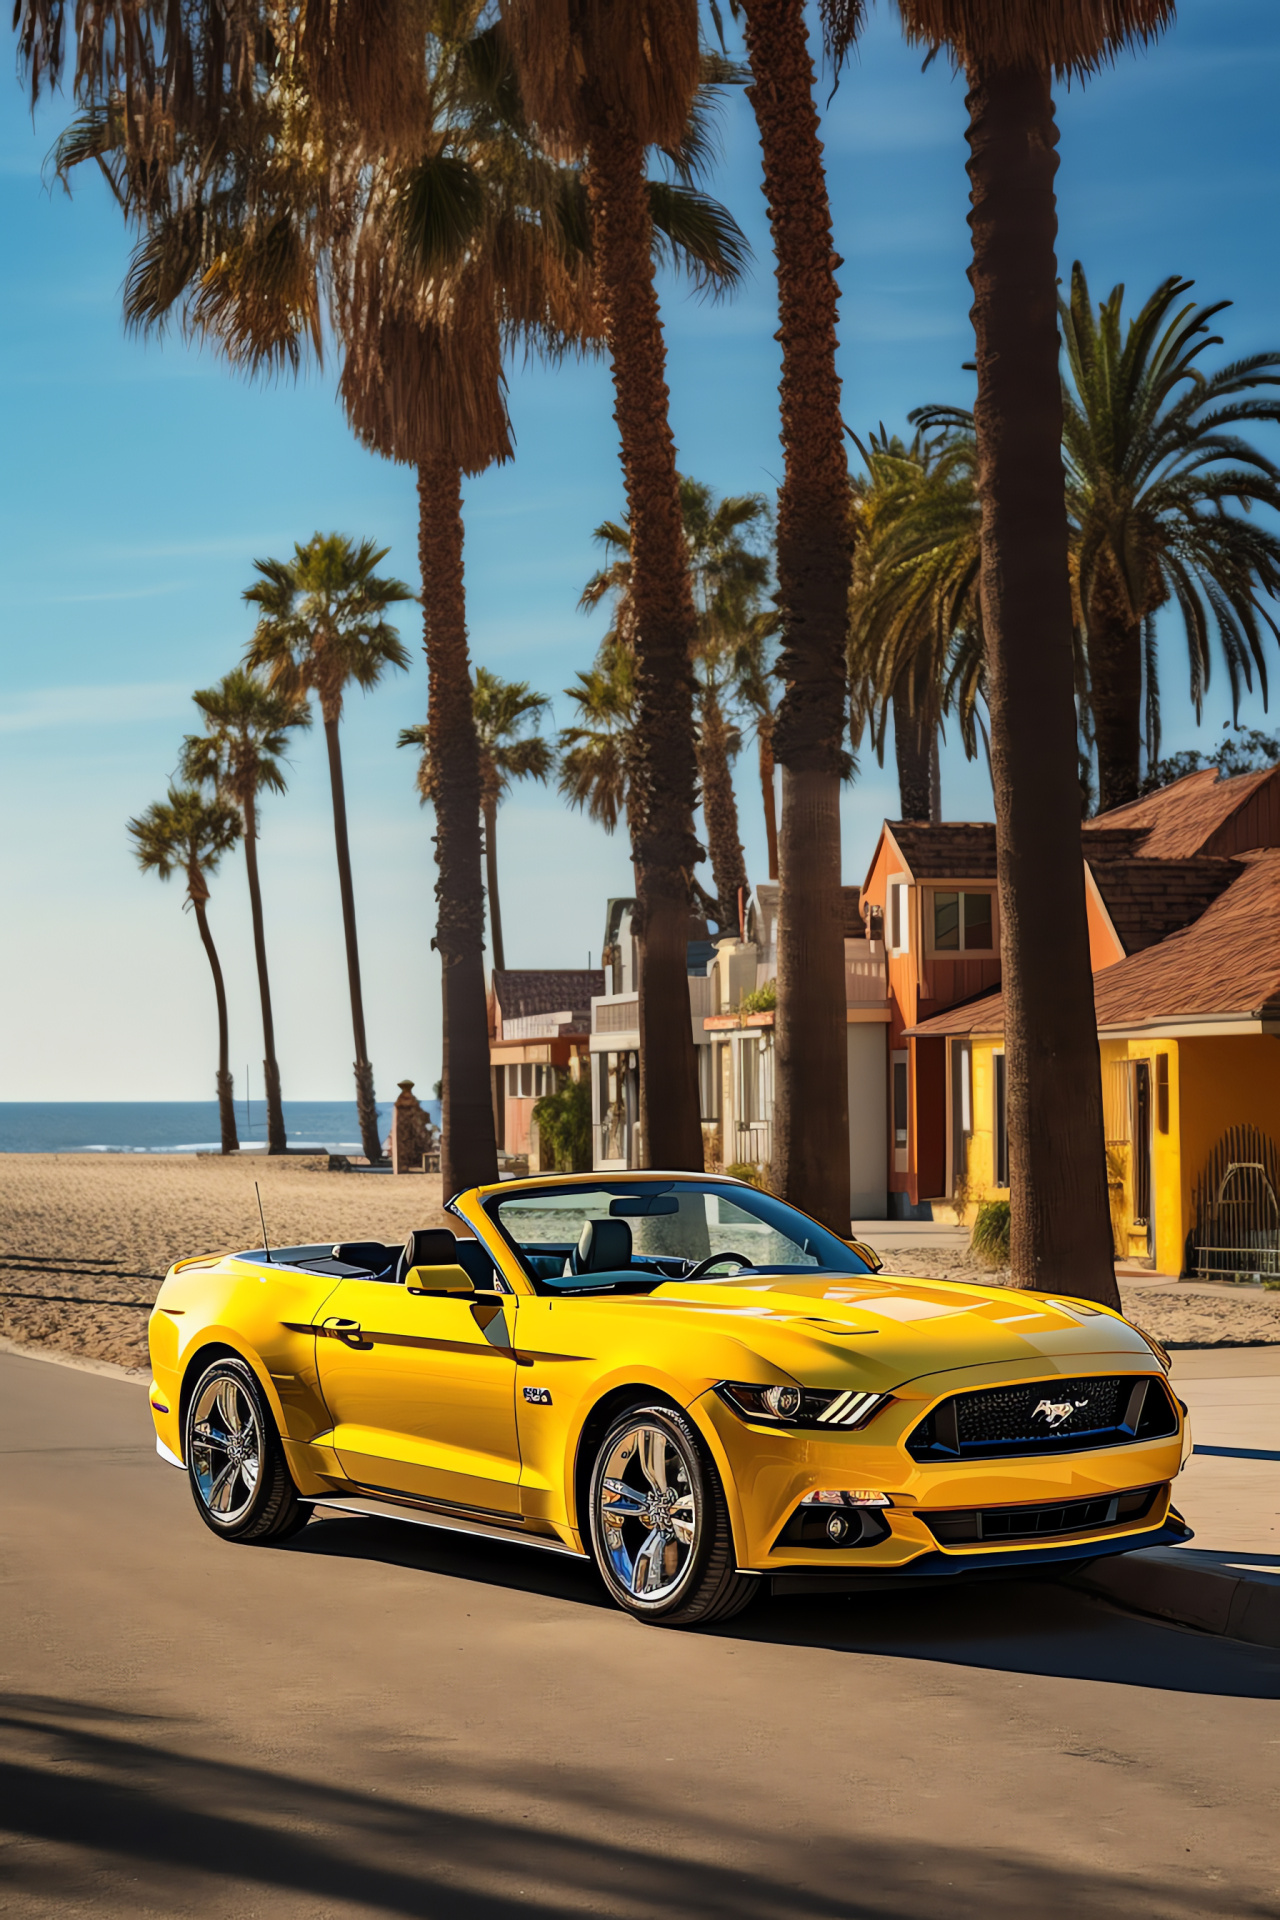 Convertible Mustang, California coastline, Sunlight on metal, Beachside scenic drive, Golden State joyride, HD Phone Image